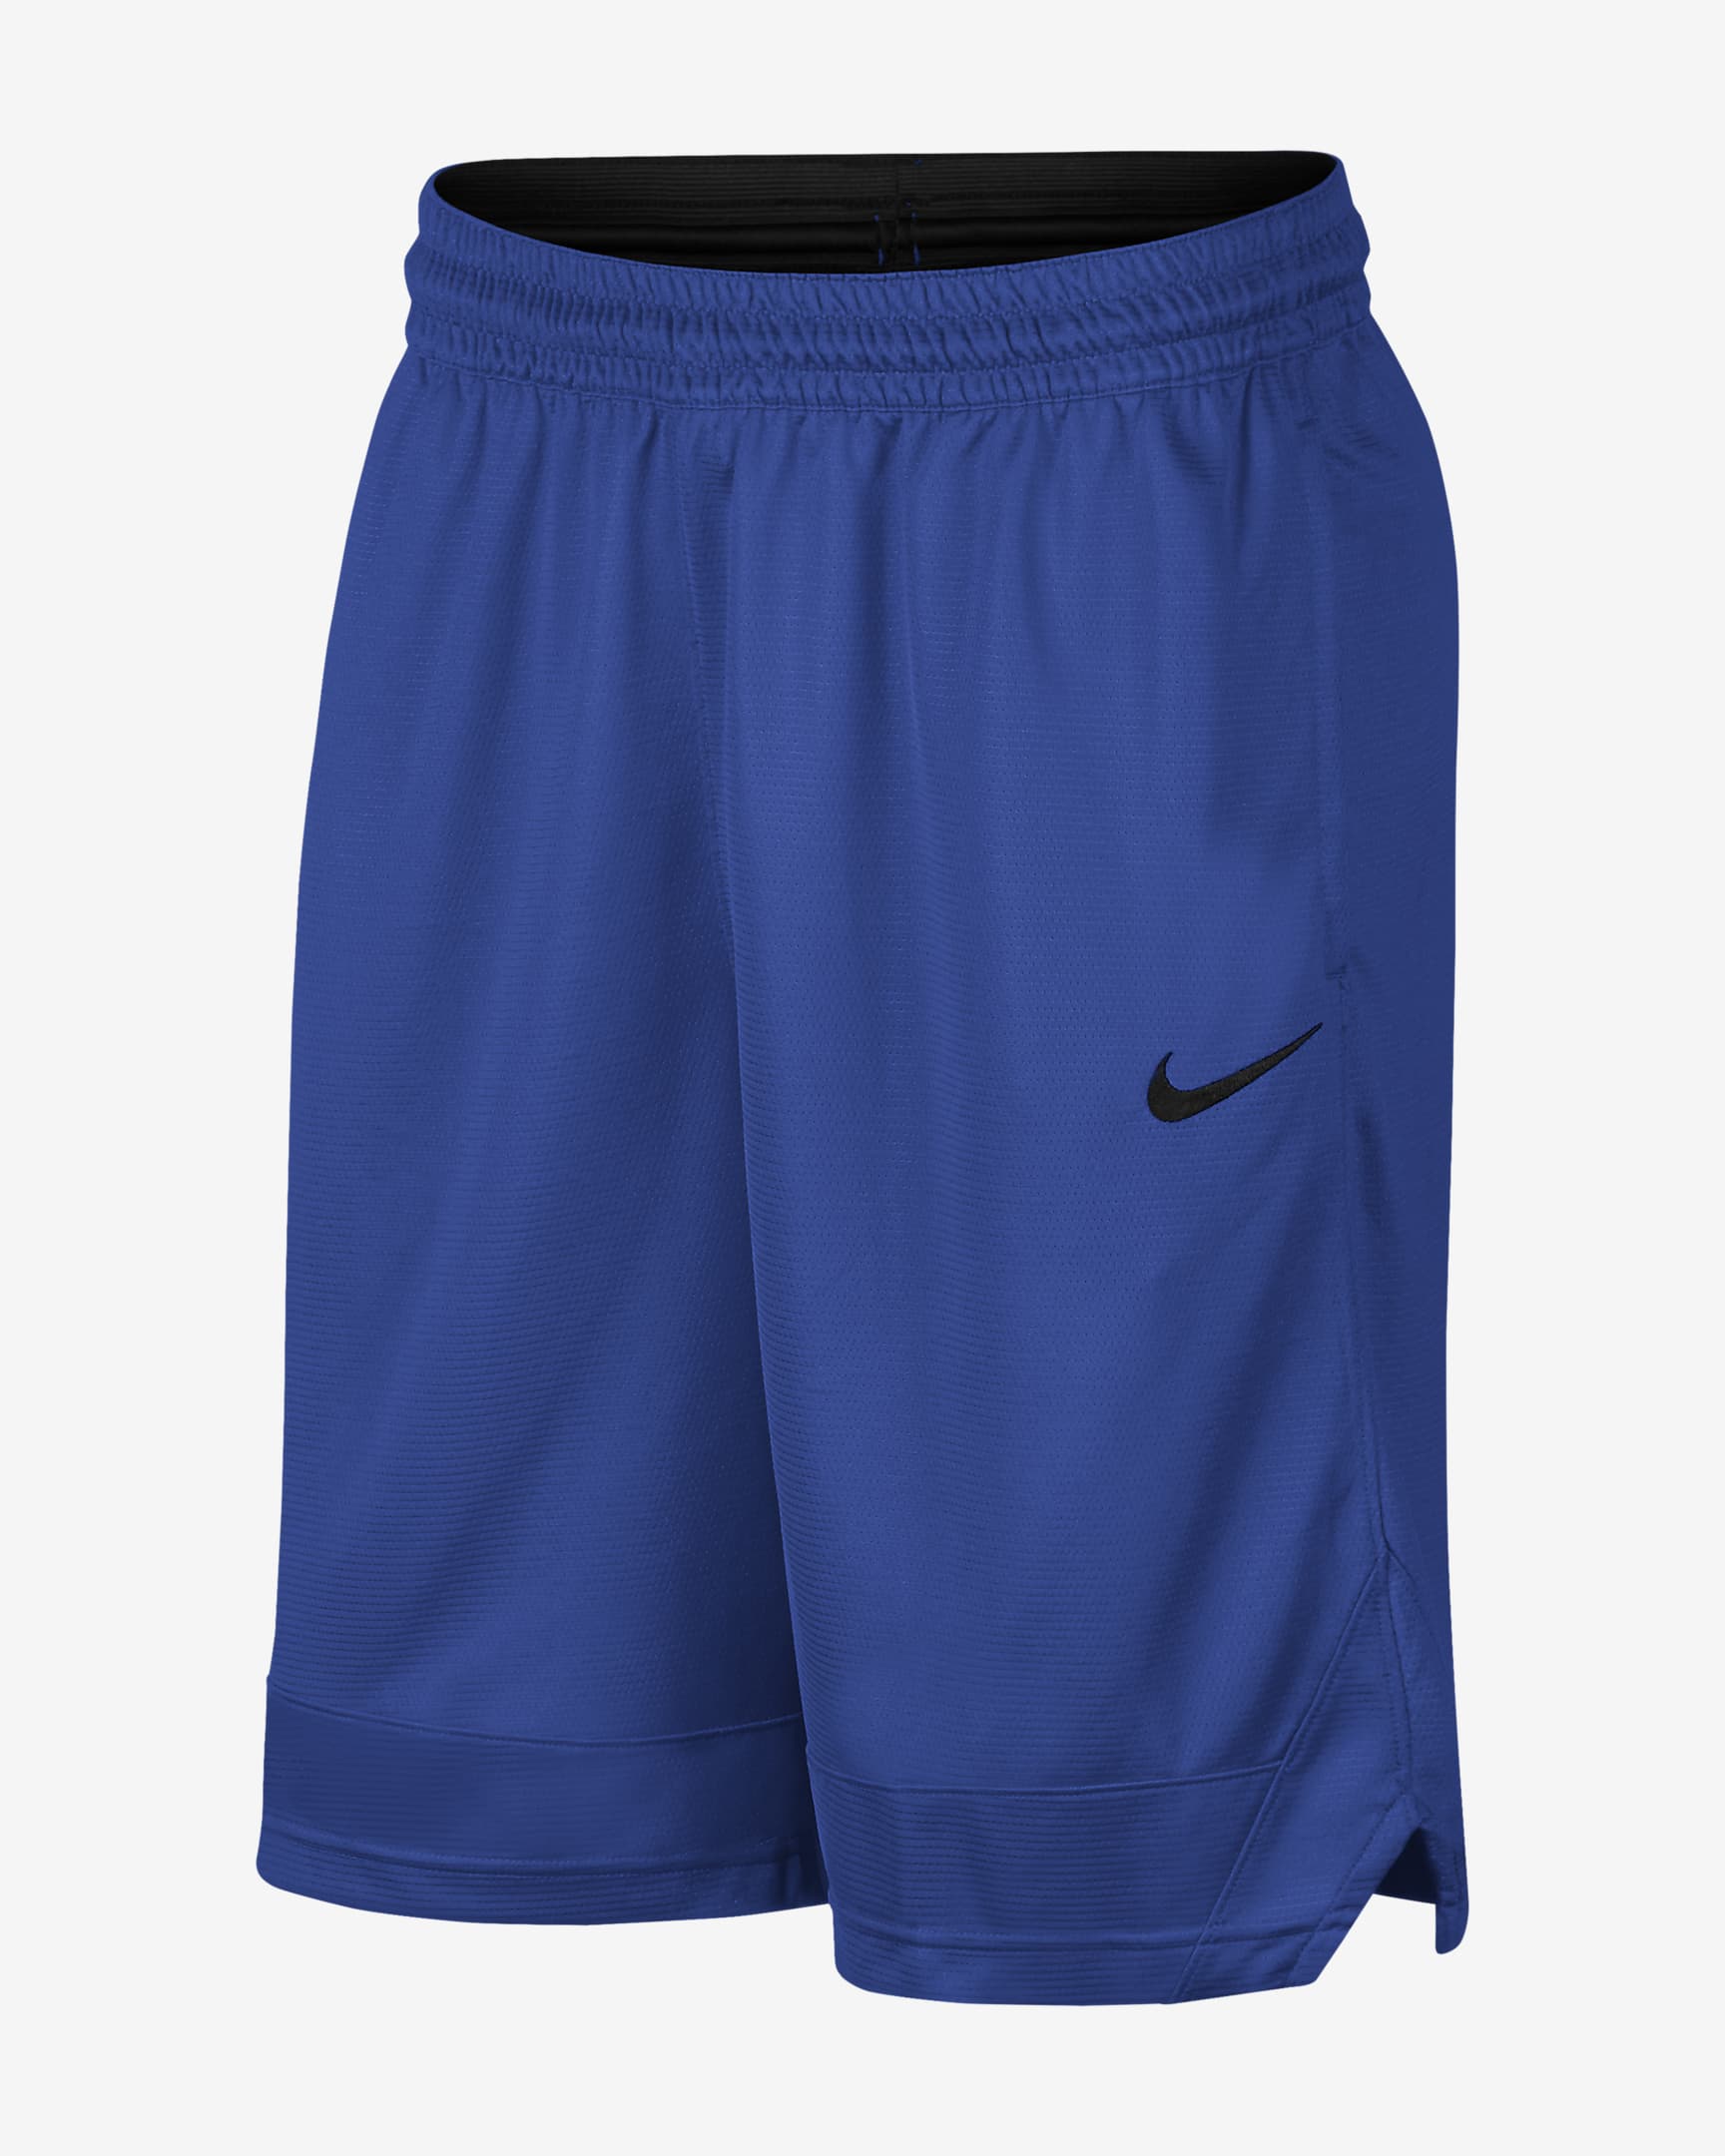 Шорты nike dri fit. Баскетбольные шорты Nike Air.